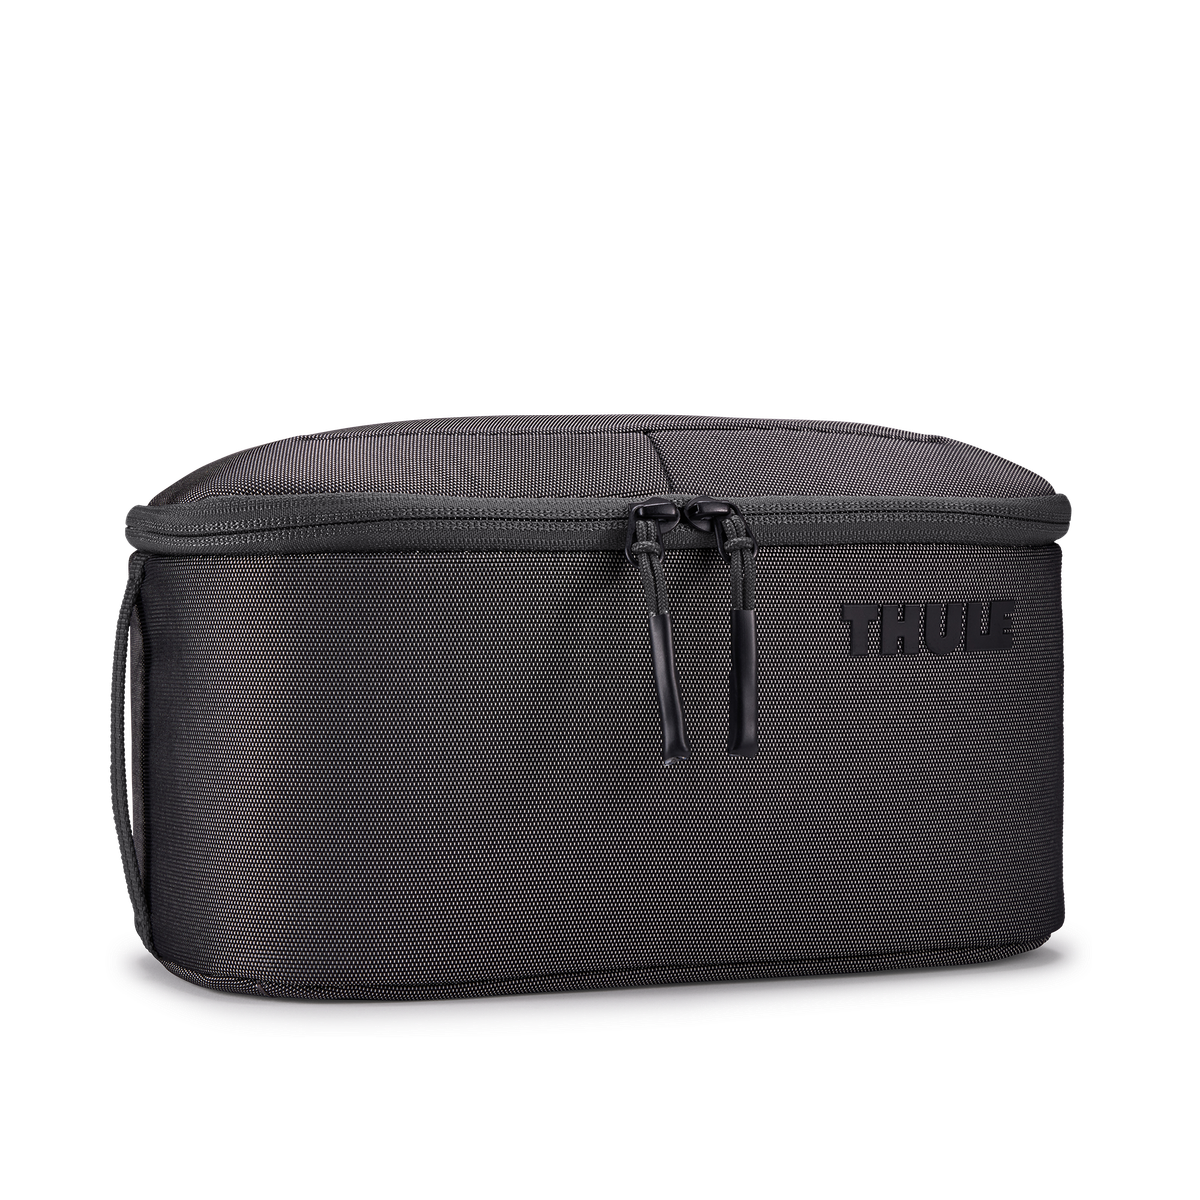 Thule Subterra 2 toiletry bag Vetiver gray